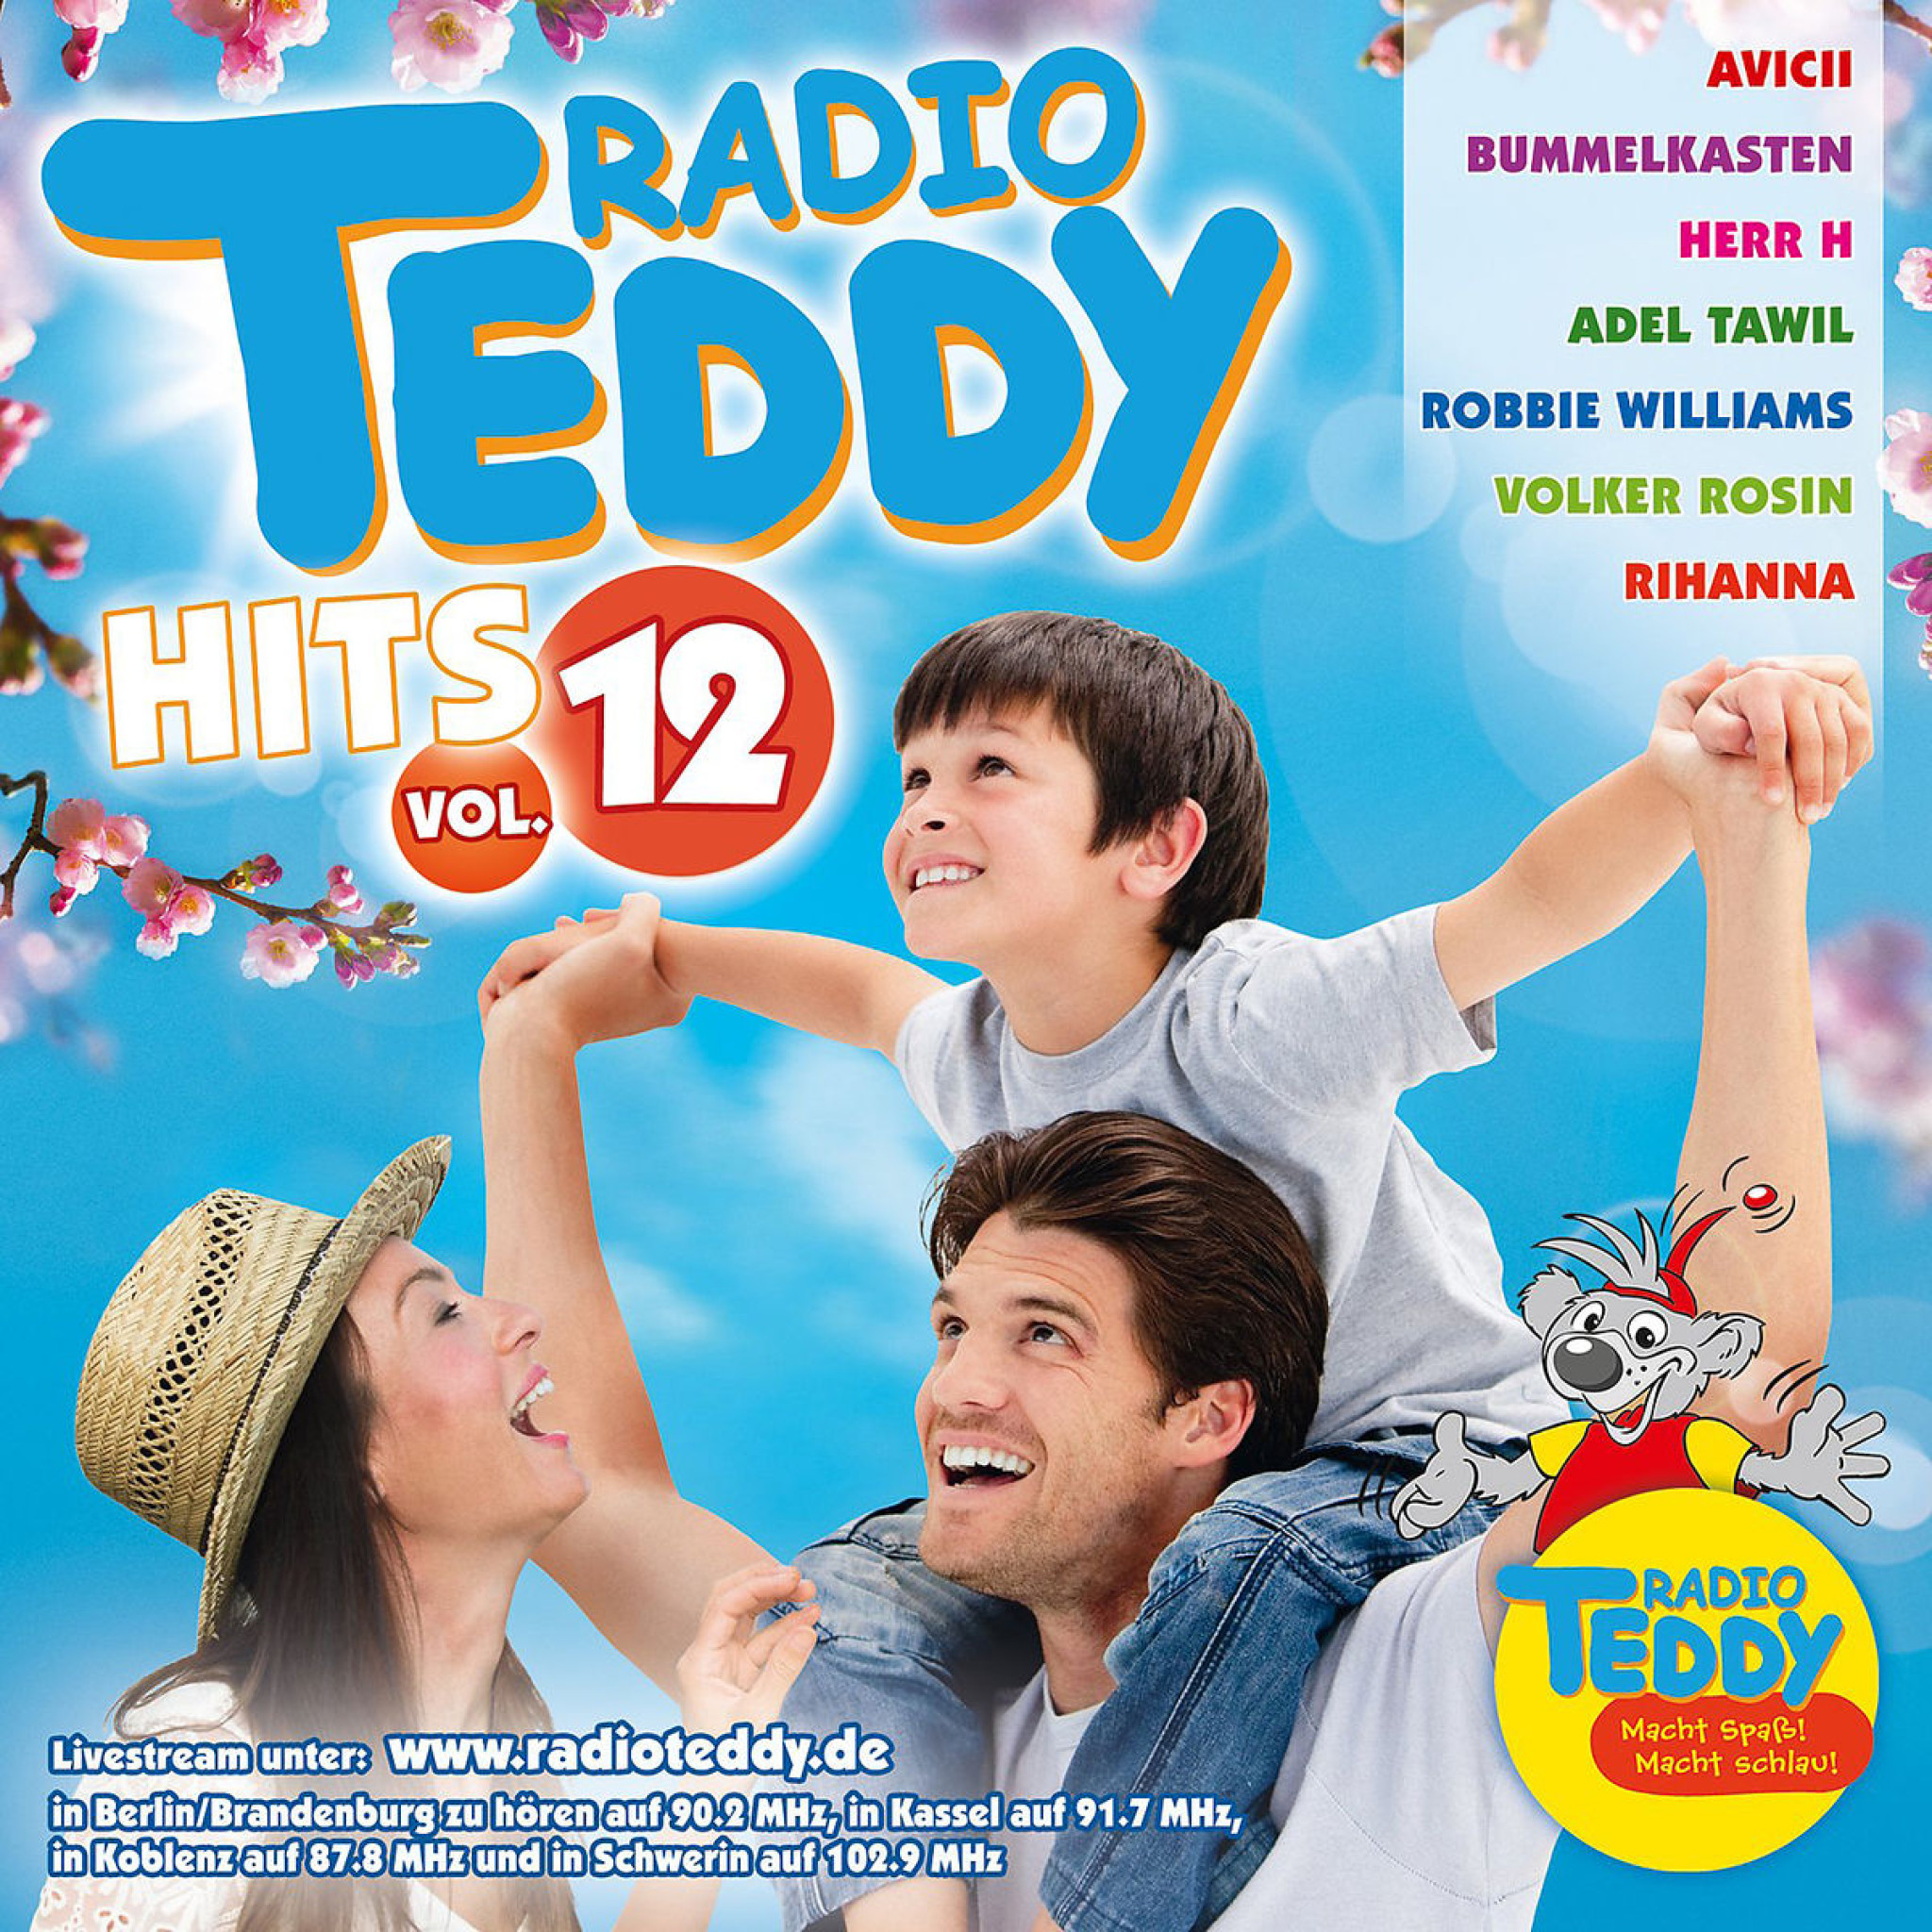 Radio TEDDY Hits Vol. 12: Various Artists